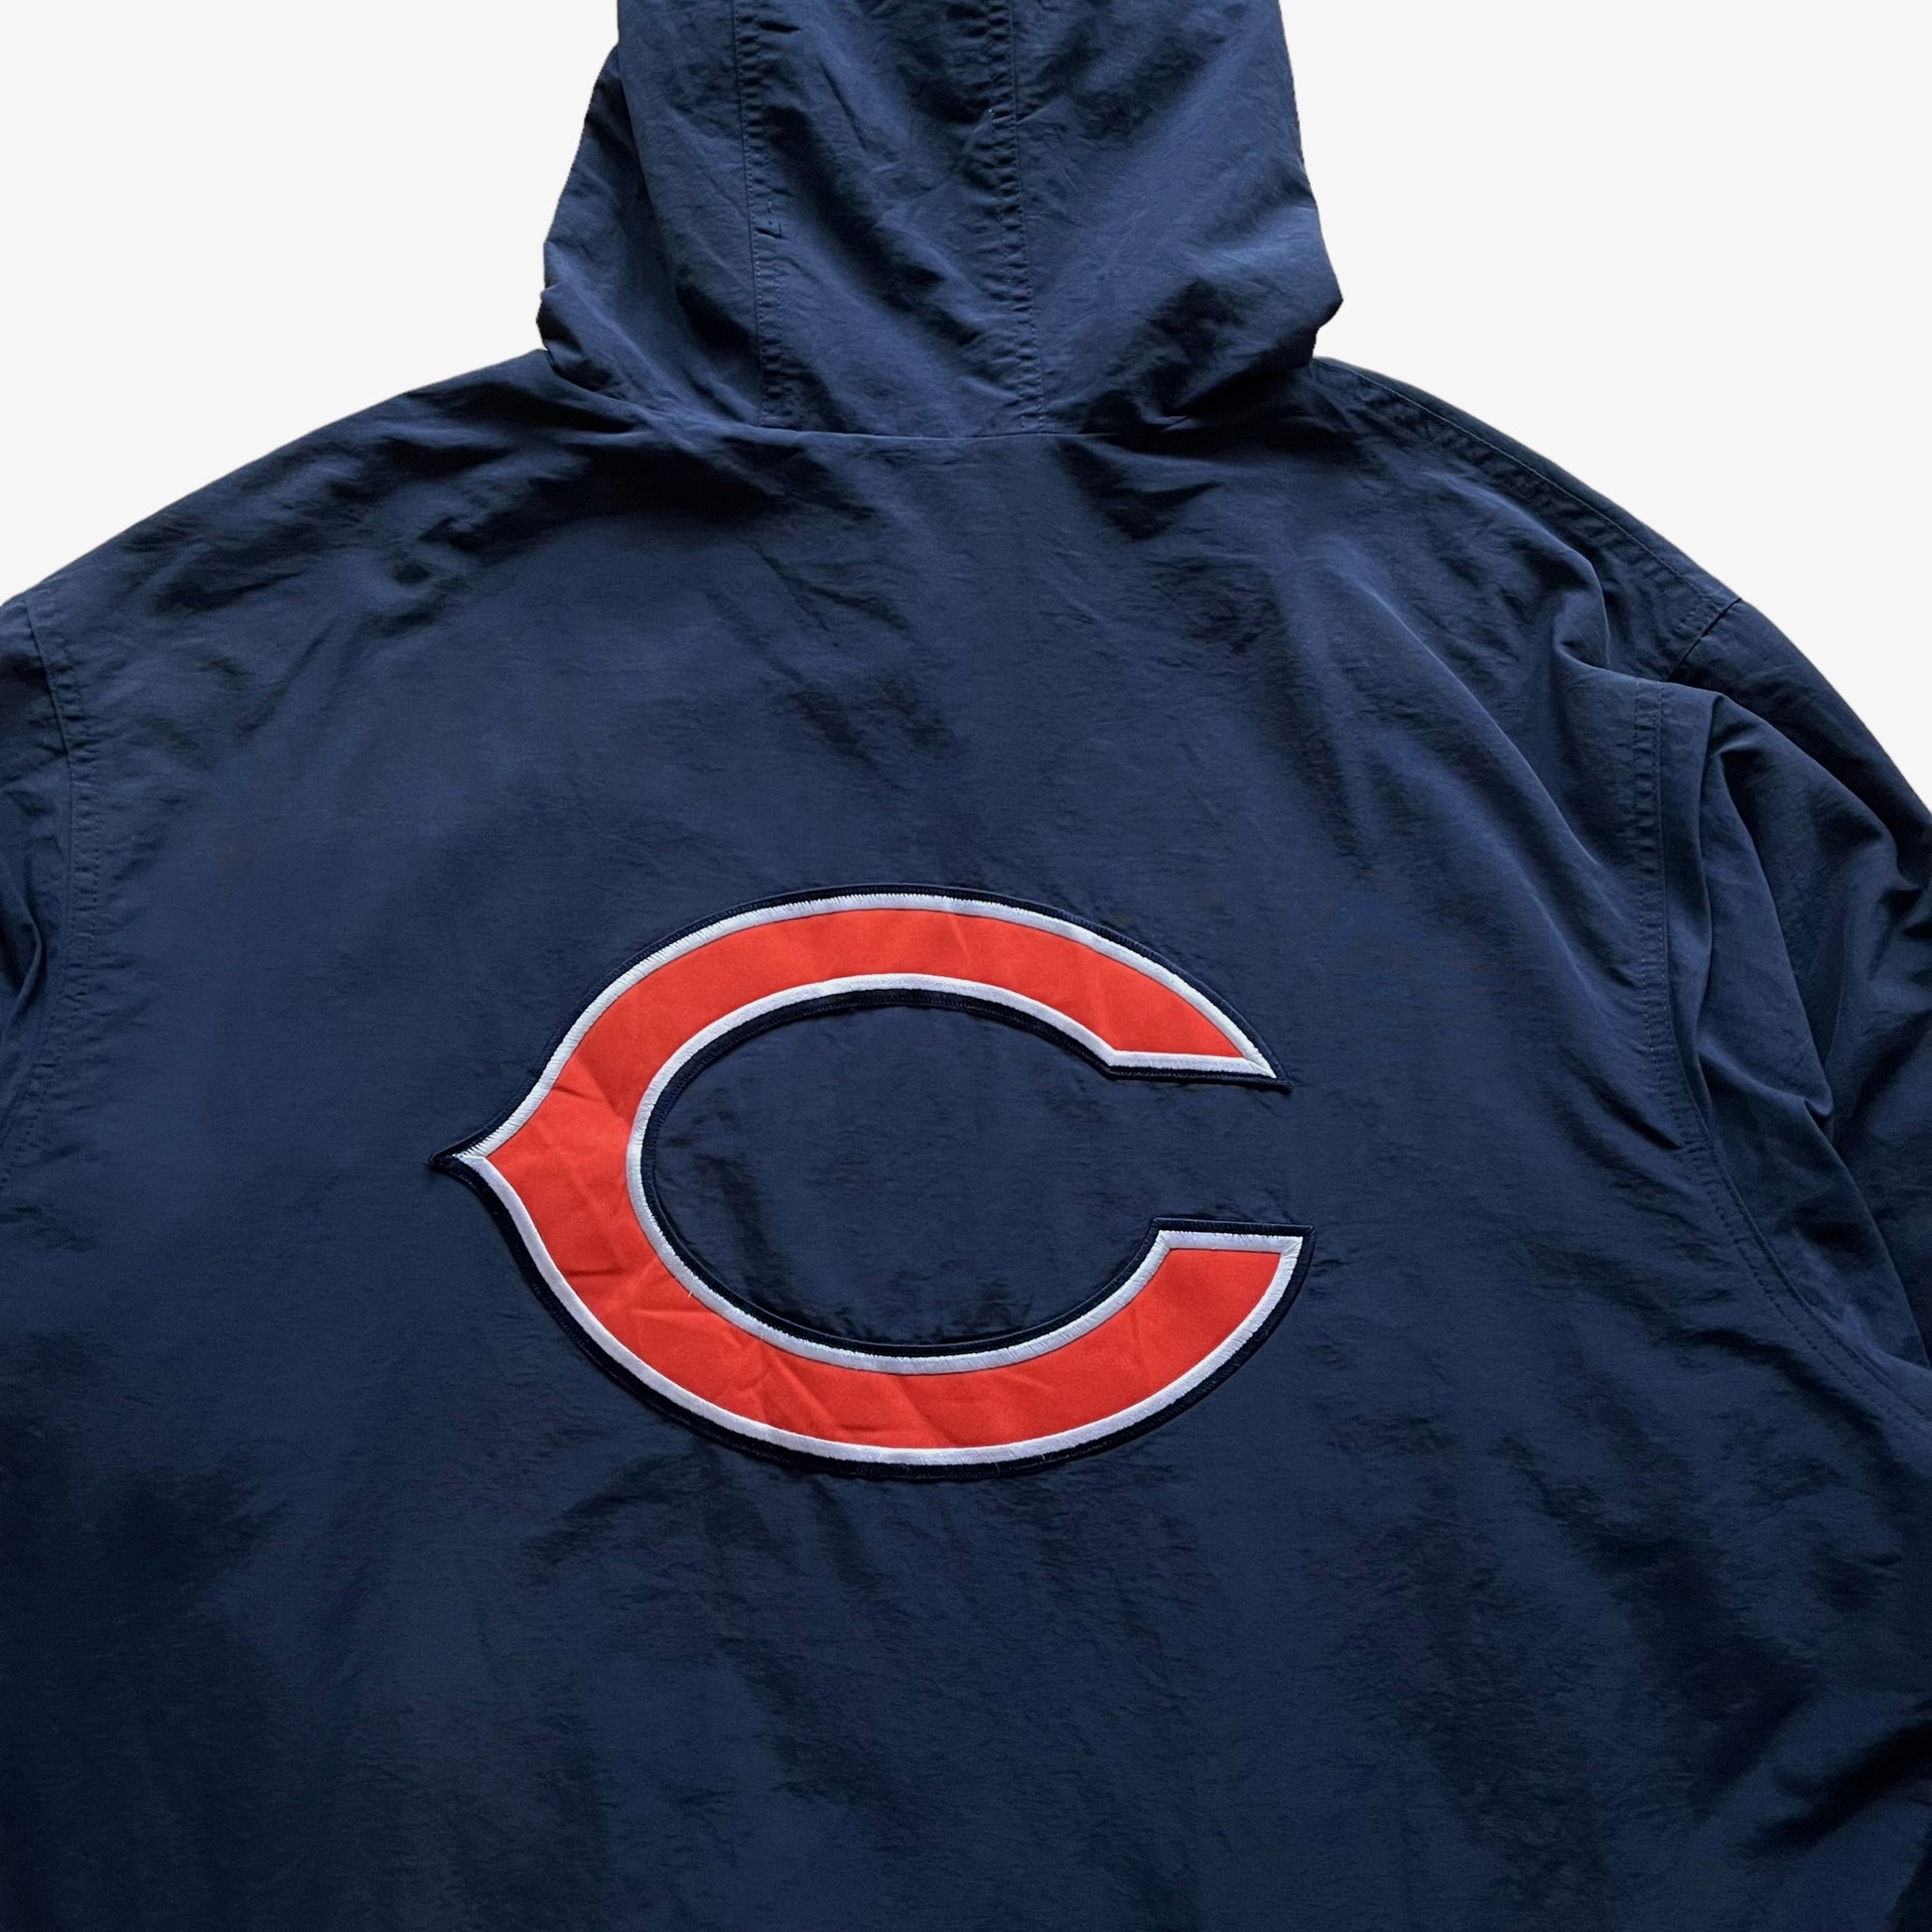 Vintage Y2K Reebok NFL Chicago Bears Jacket With Back Embroidered Team Crest Badge - Casspios Dream